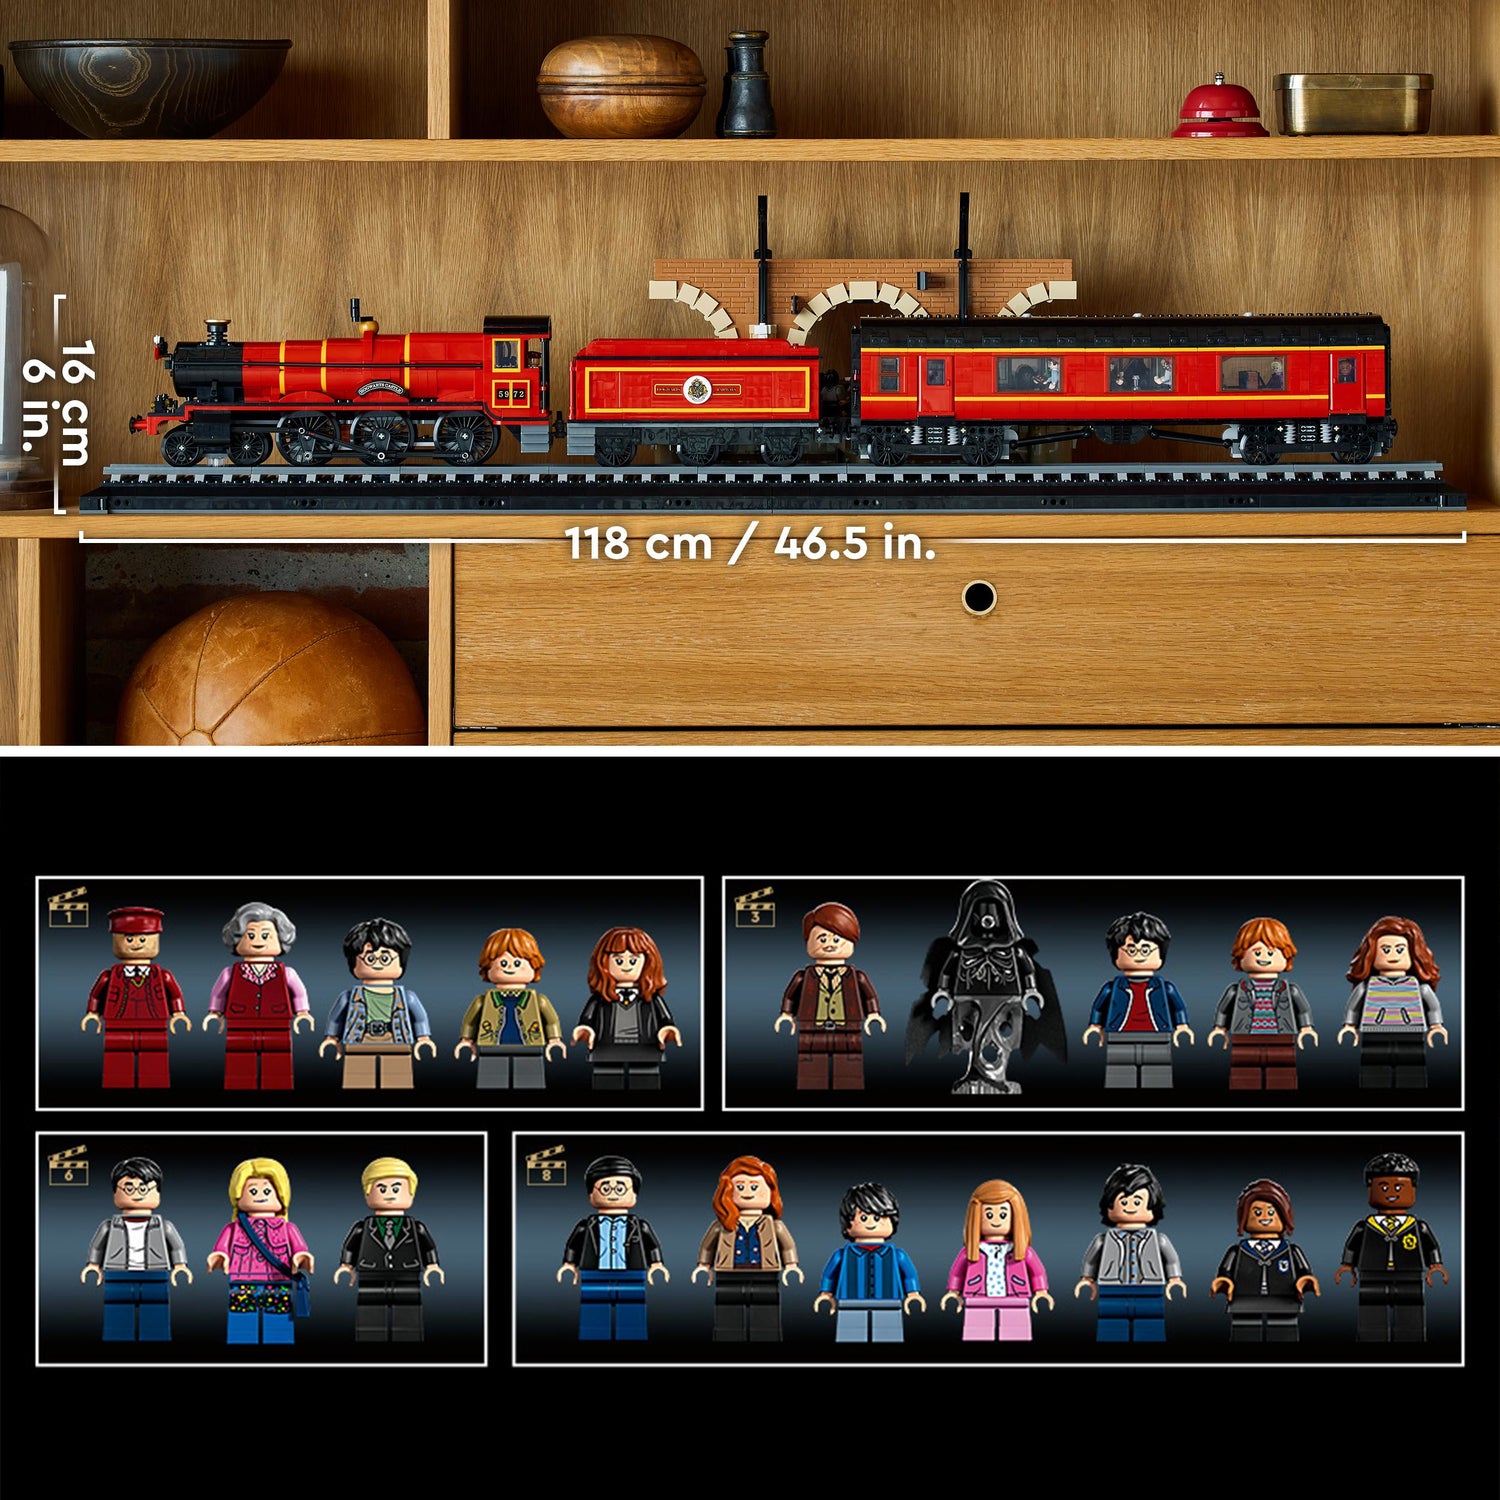 LEGO® Harry Potter: Hogwarts Express – Collectors' Edition